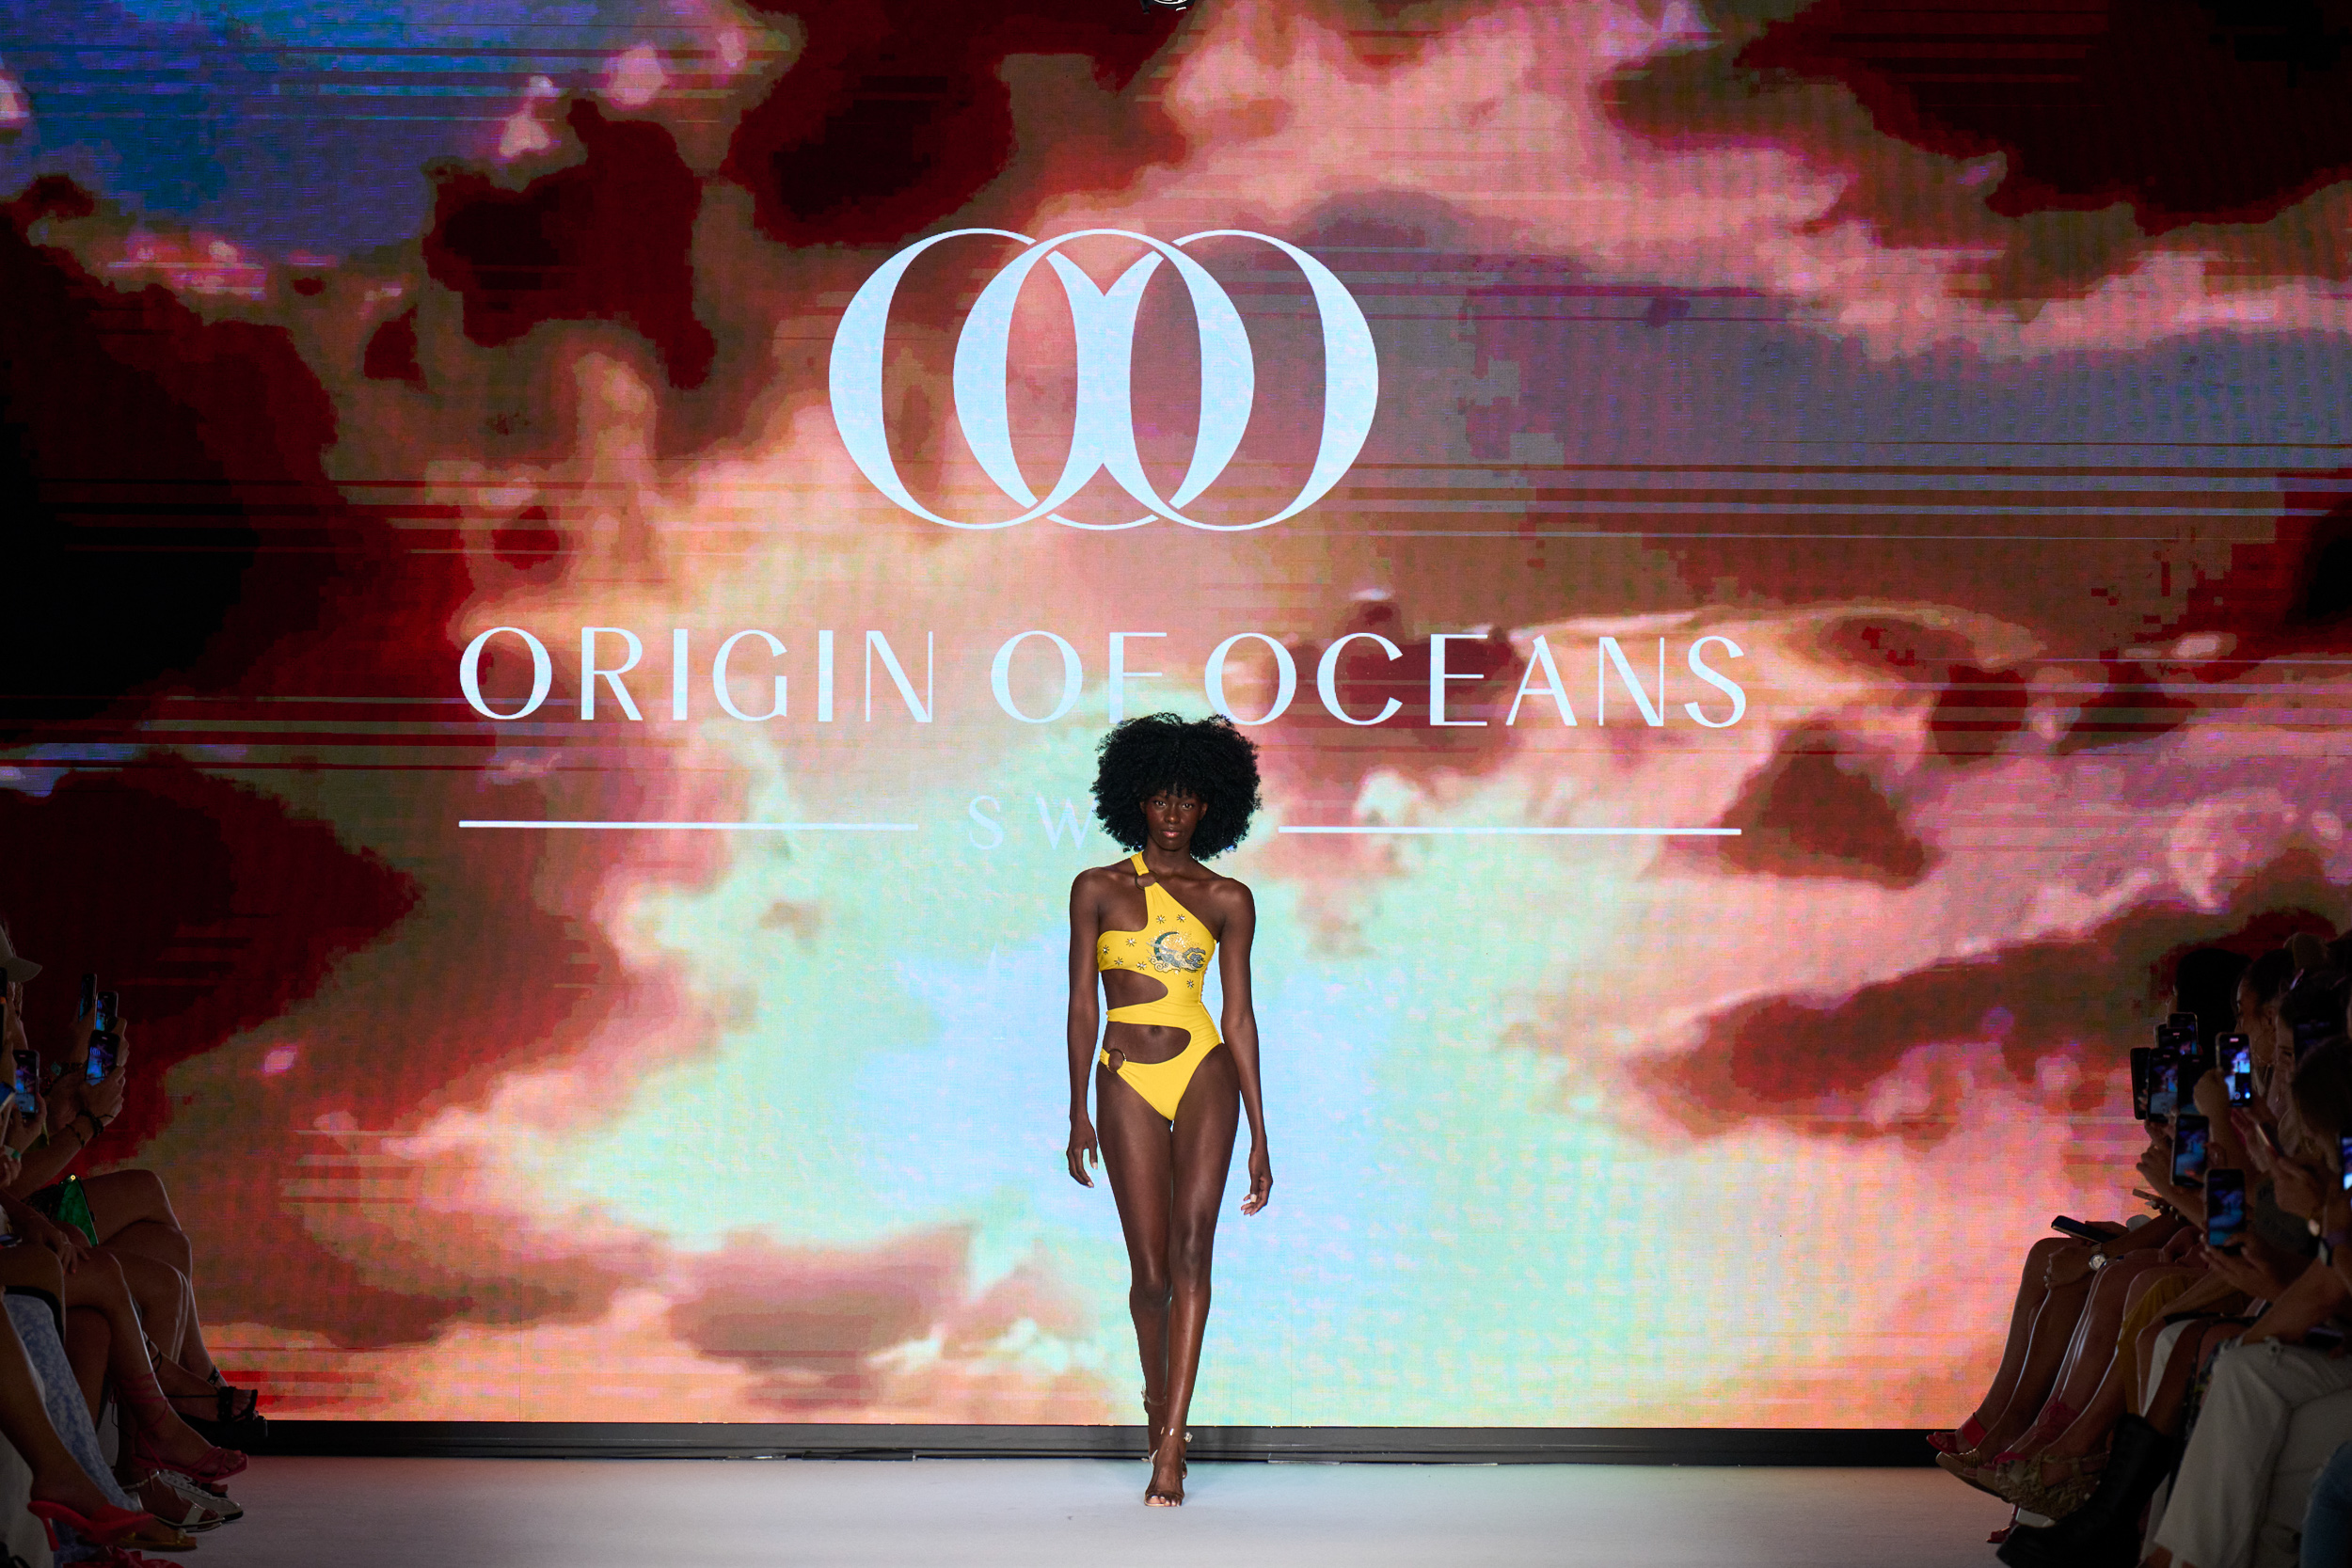 Origin Of Oceans Spring 2023 Swimwear Fashion Show 